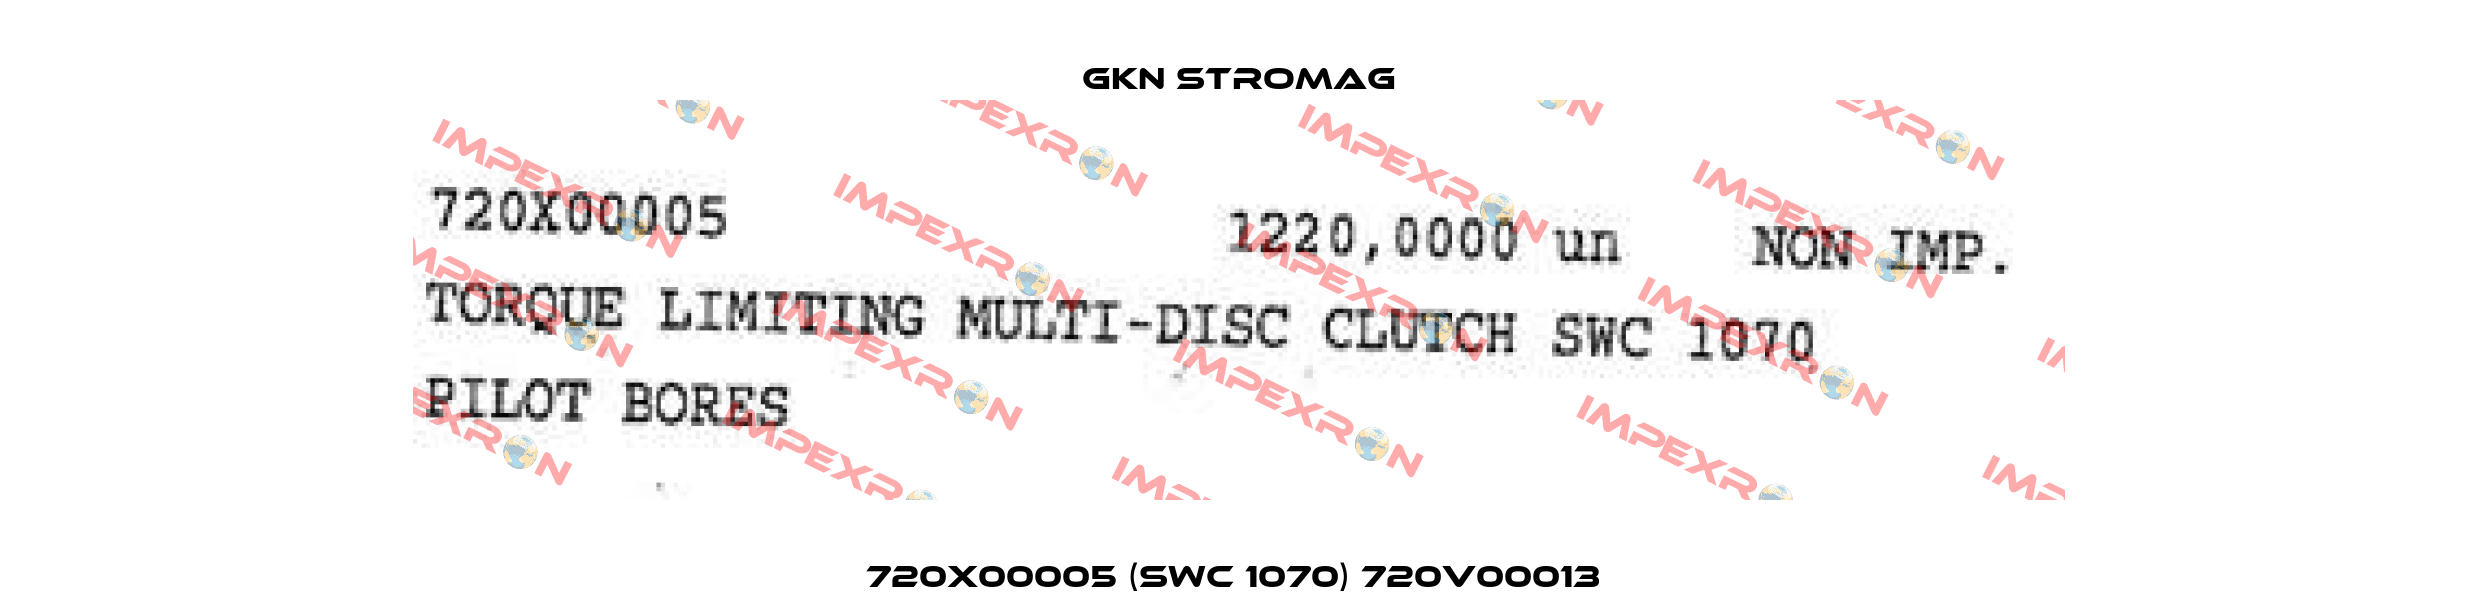 720X00005 (SWC 1070) 720V00013  GKN Stromag